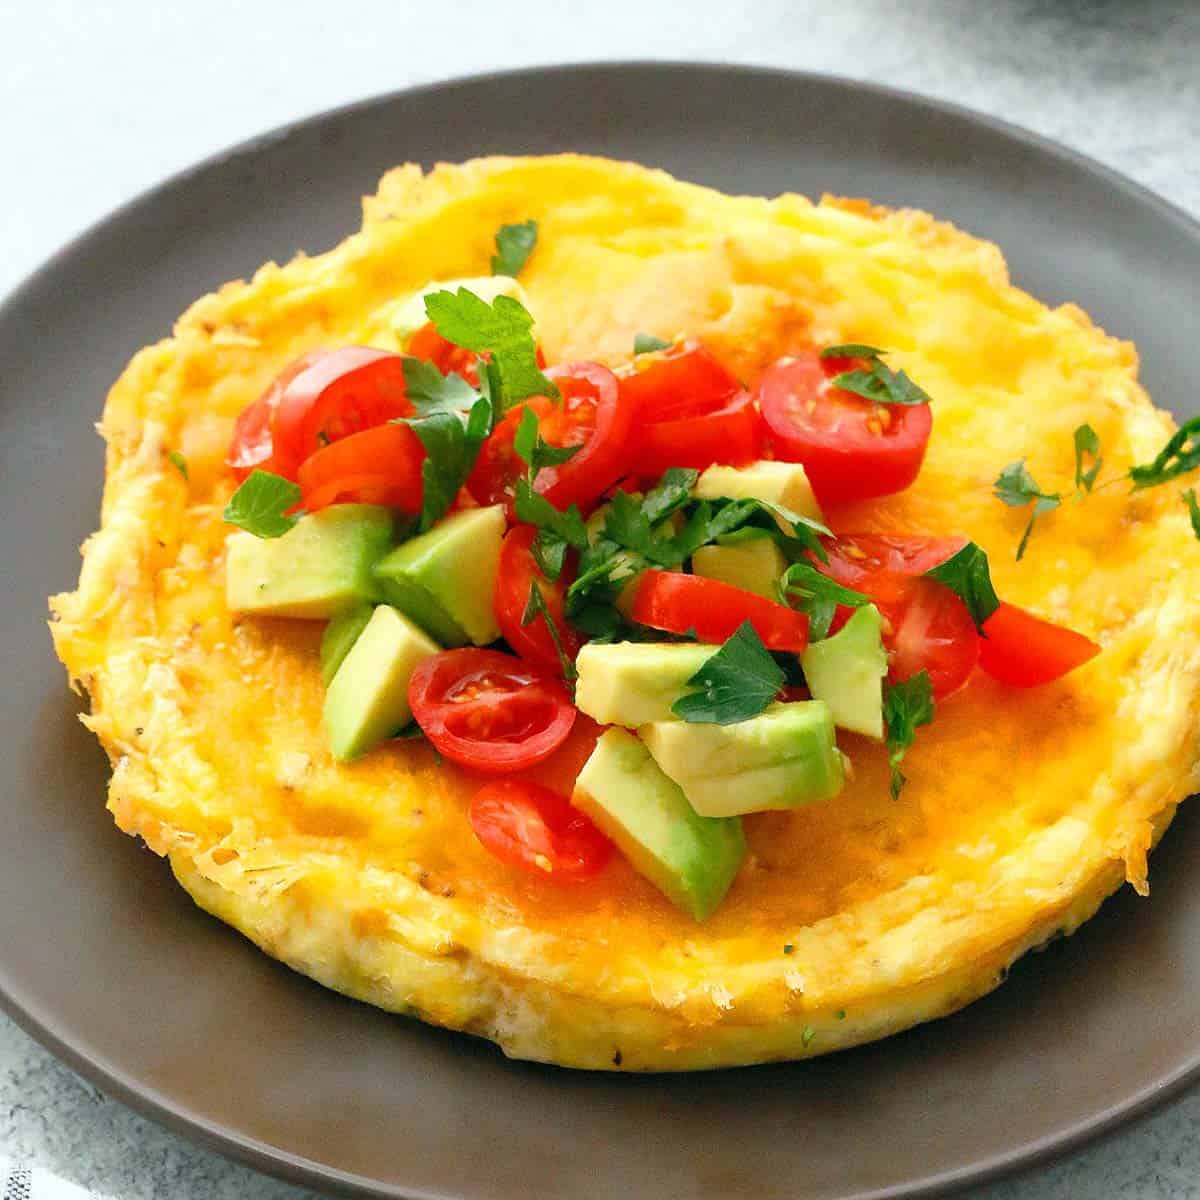 https://www.kitchenathoskins.com/wp-content/uploads/2021/08/air-fryer-omelette-31-yum-comp-1.jpg